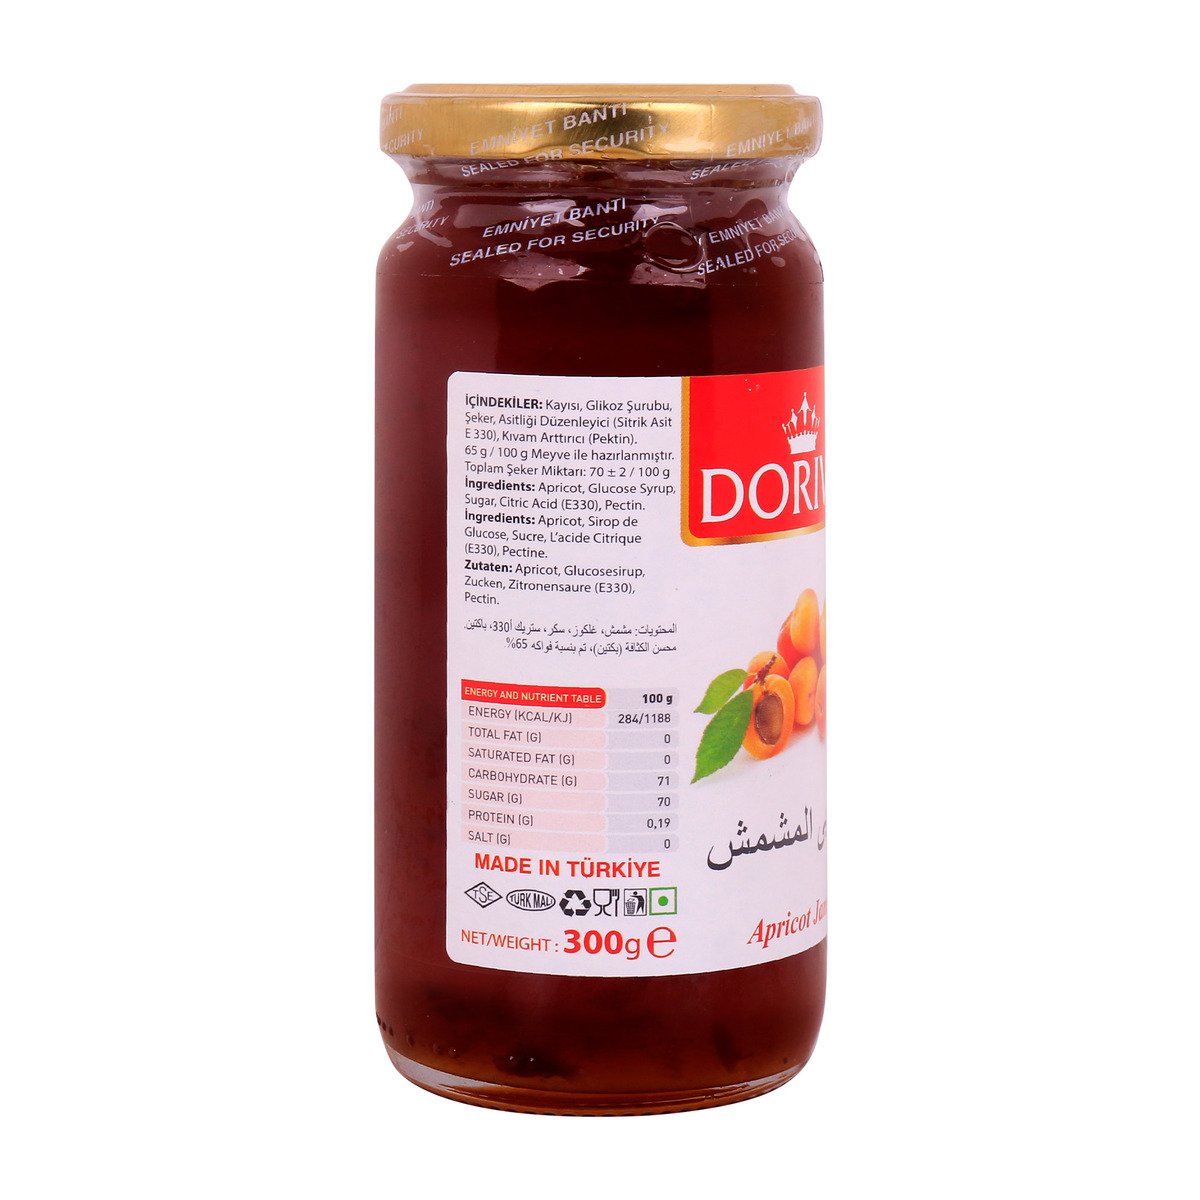 Doriva Apricot Jam 300g